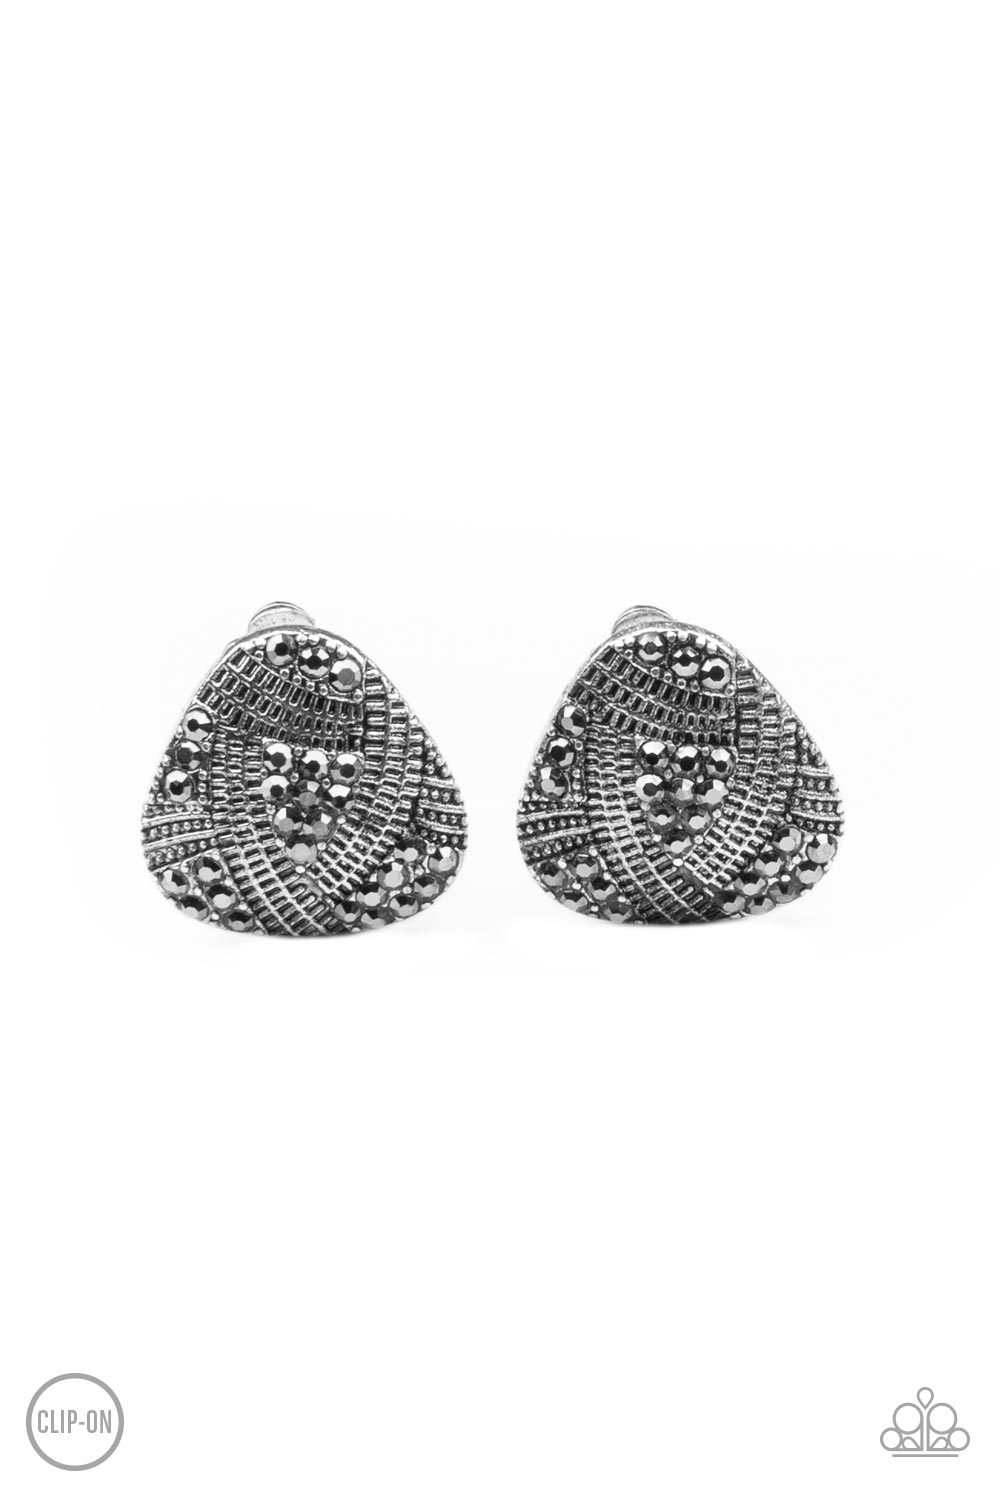 Gorgeously Galleria - Silver Clip-On Earring freeshipping - JewLz4u Gemstone Gallery